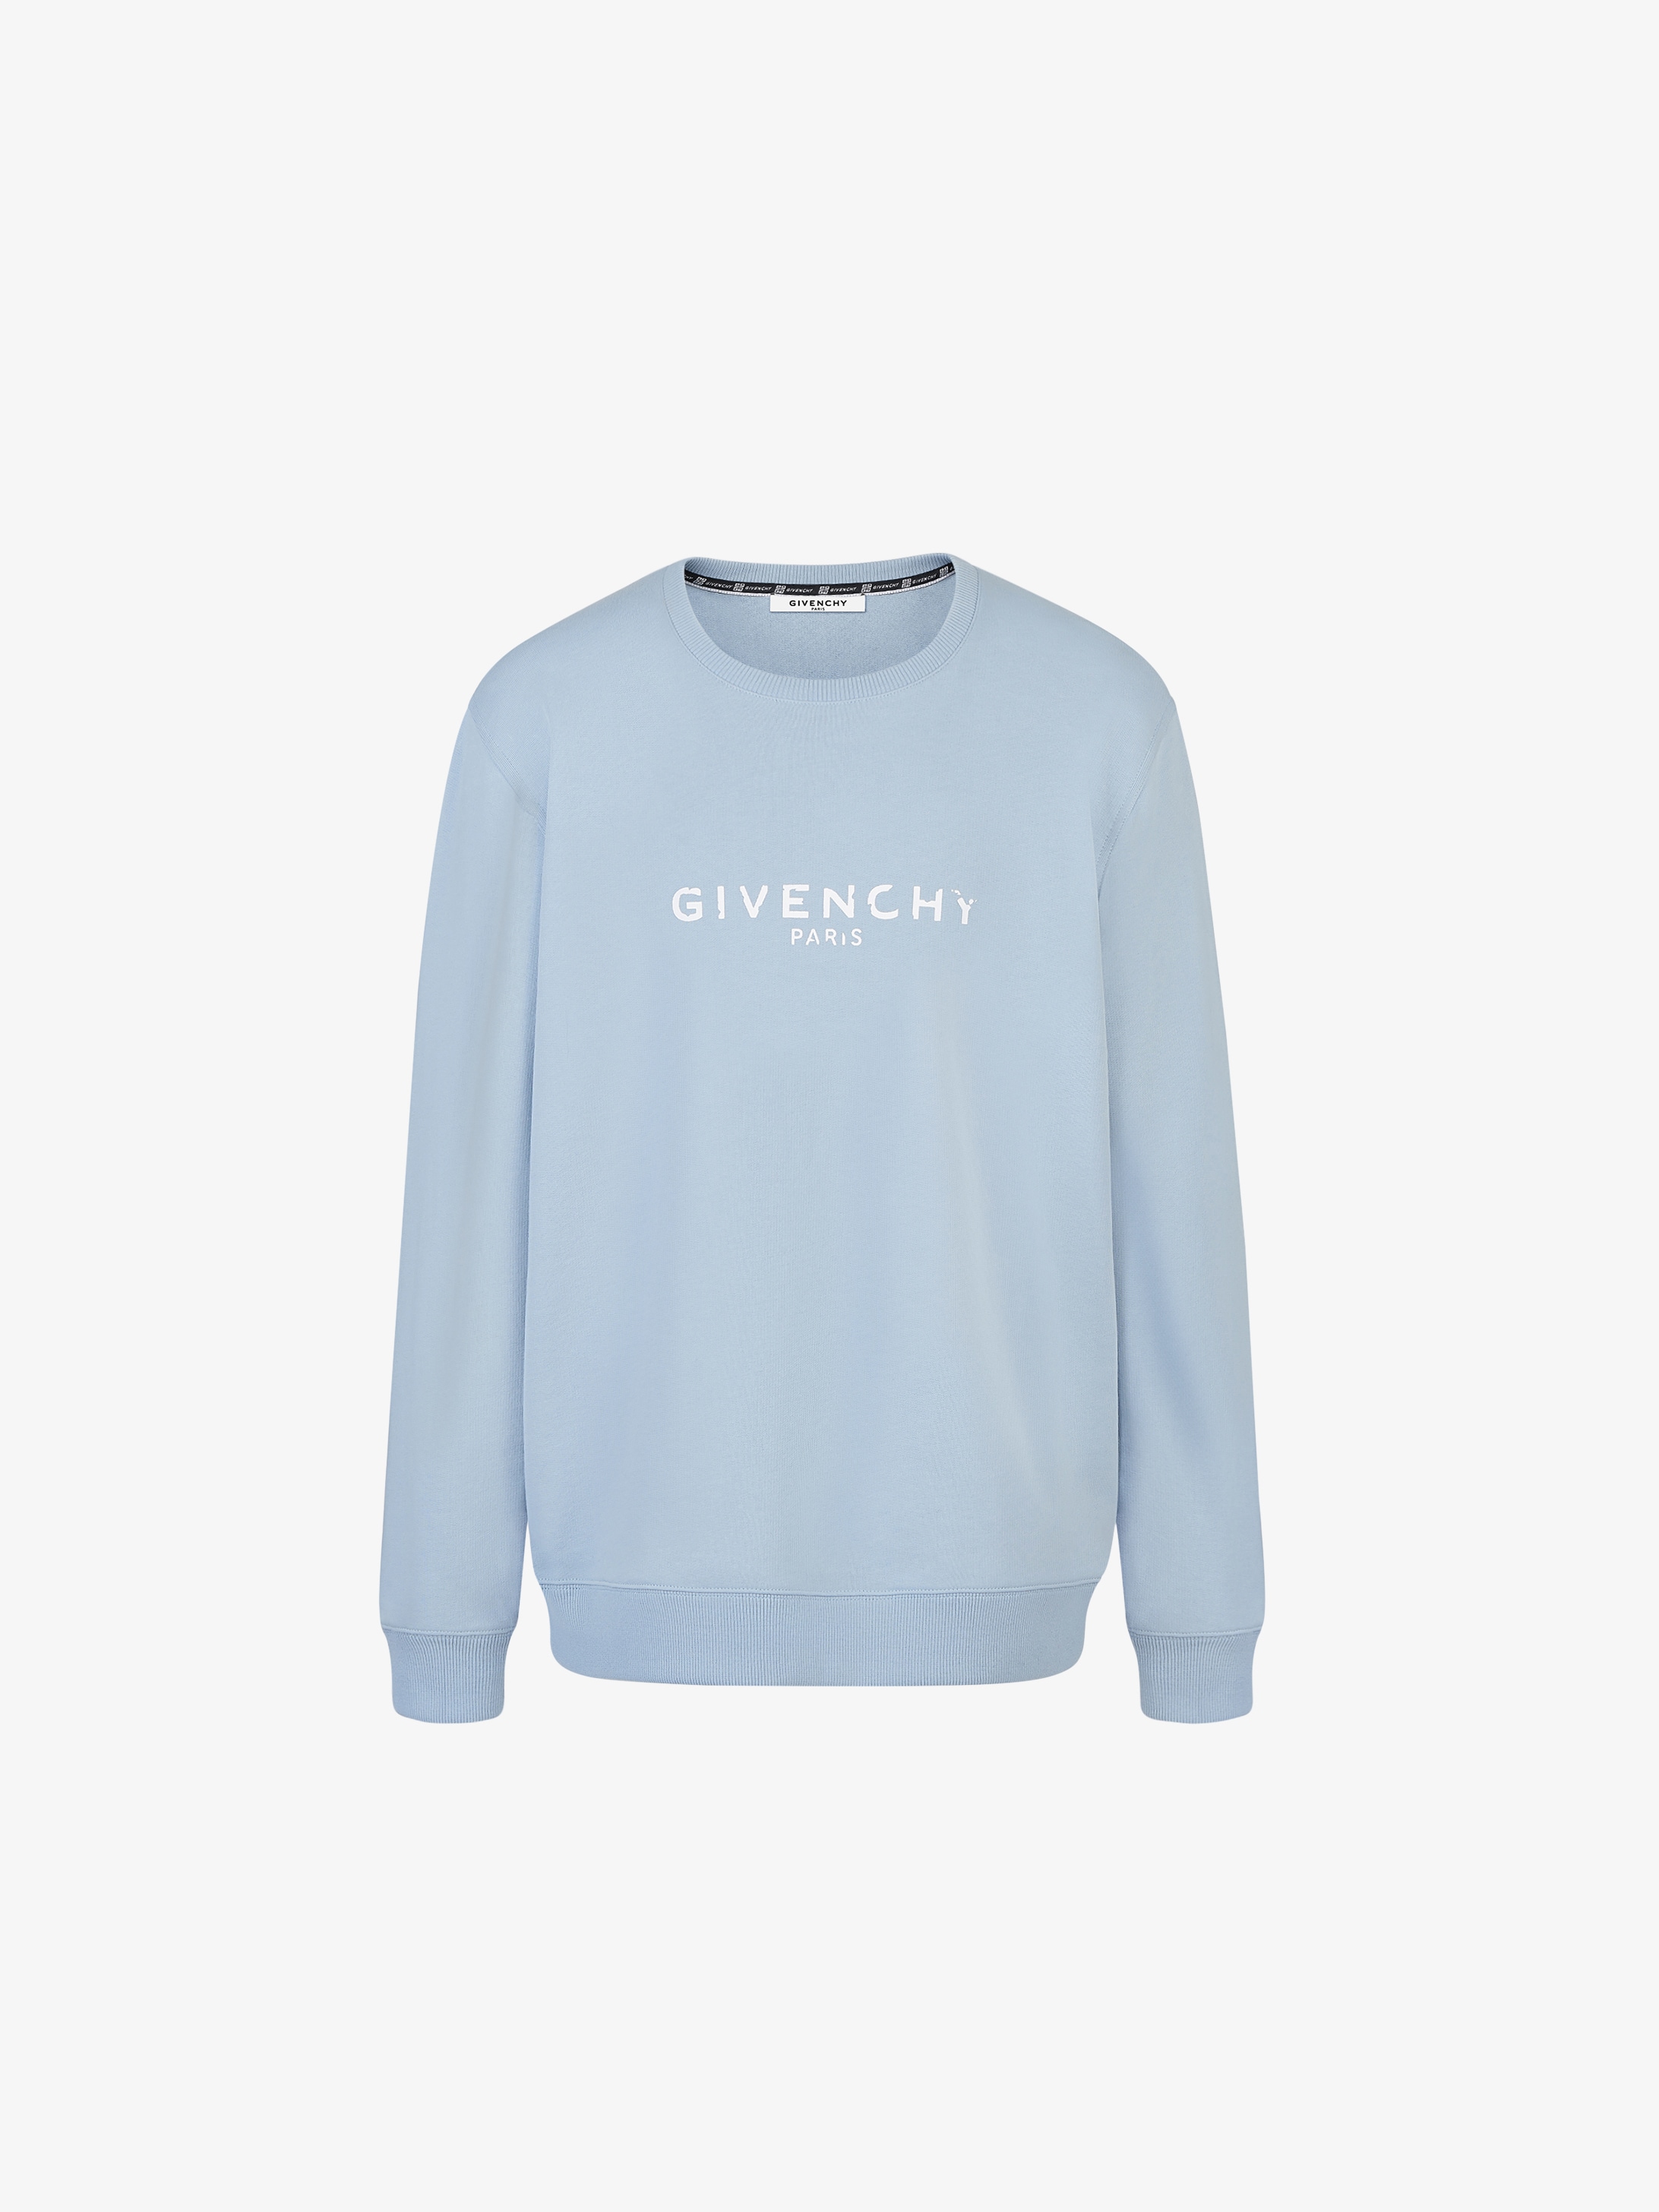 blue givenchy sweatshirt